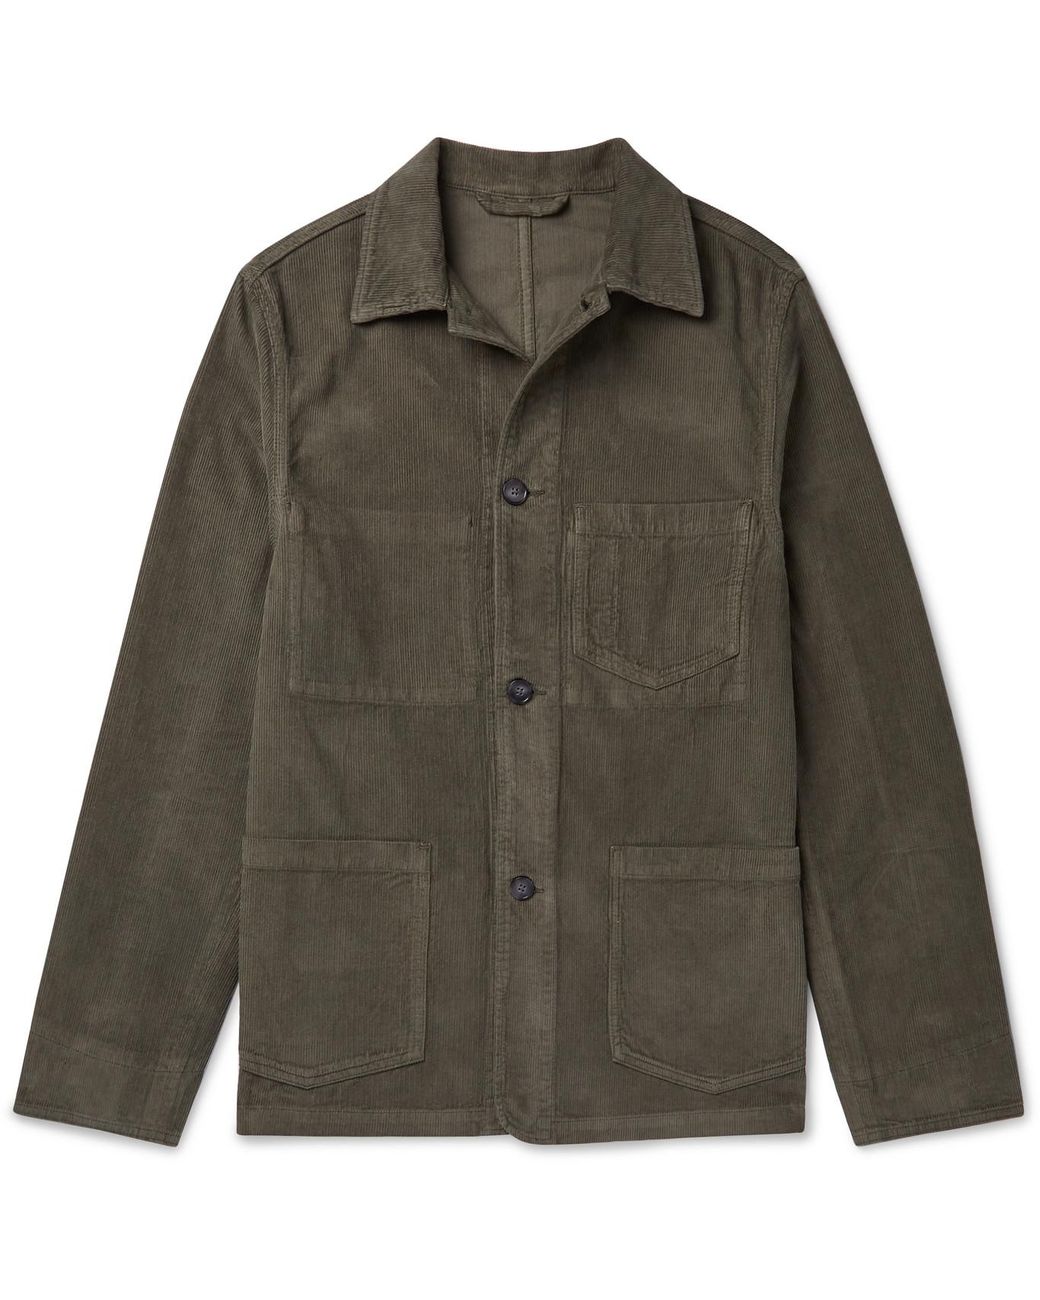 Officine Generale Cotton-corduroy Chore Jacket in Green for Men - Lyst